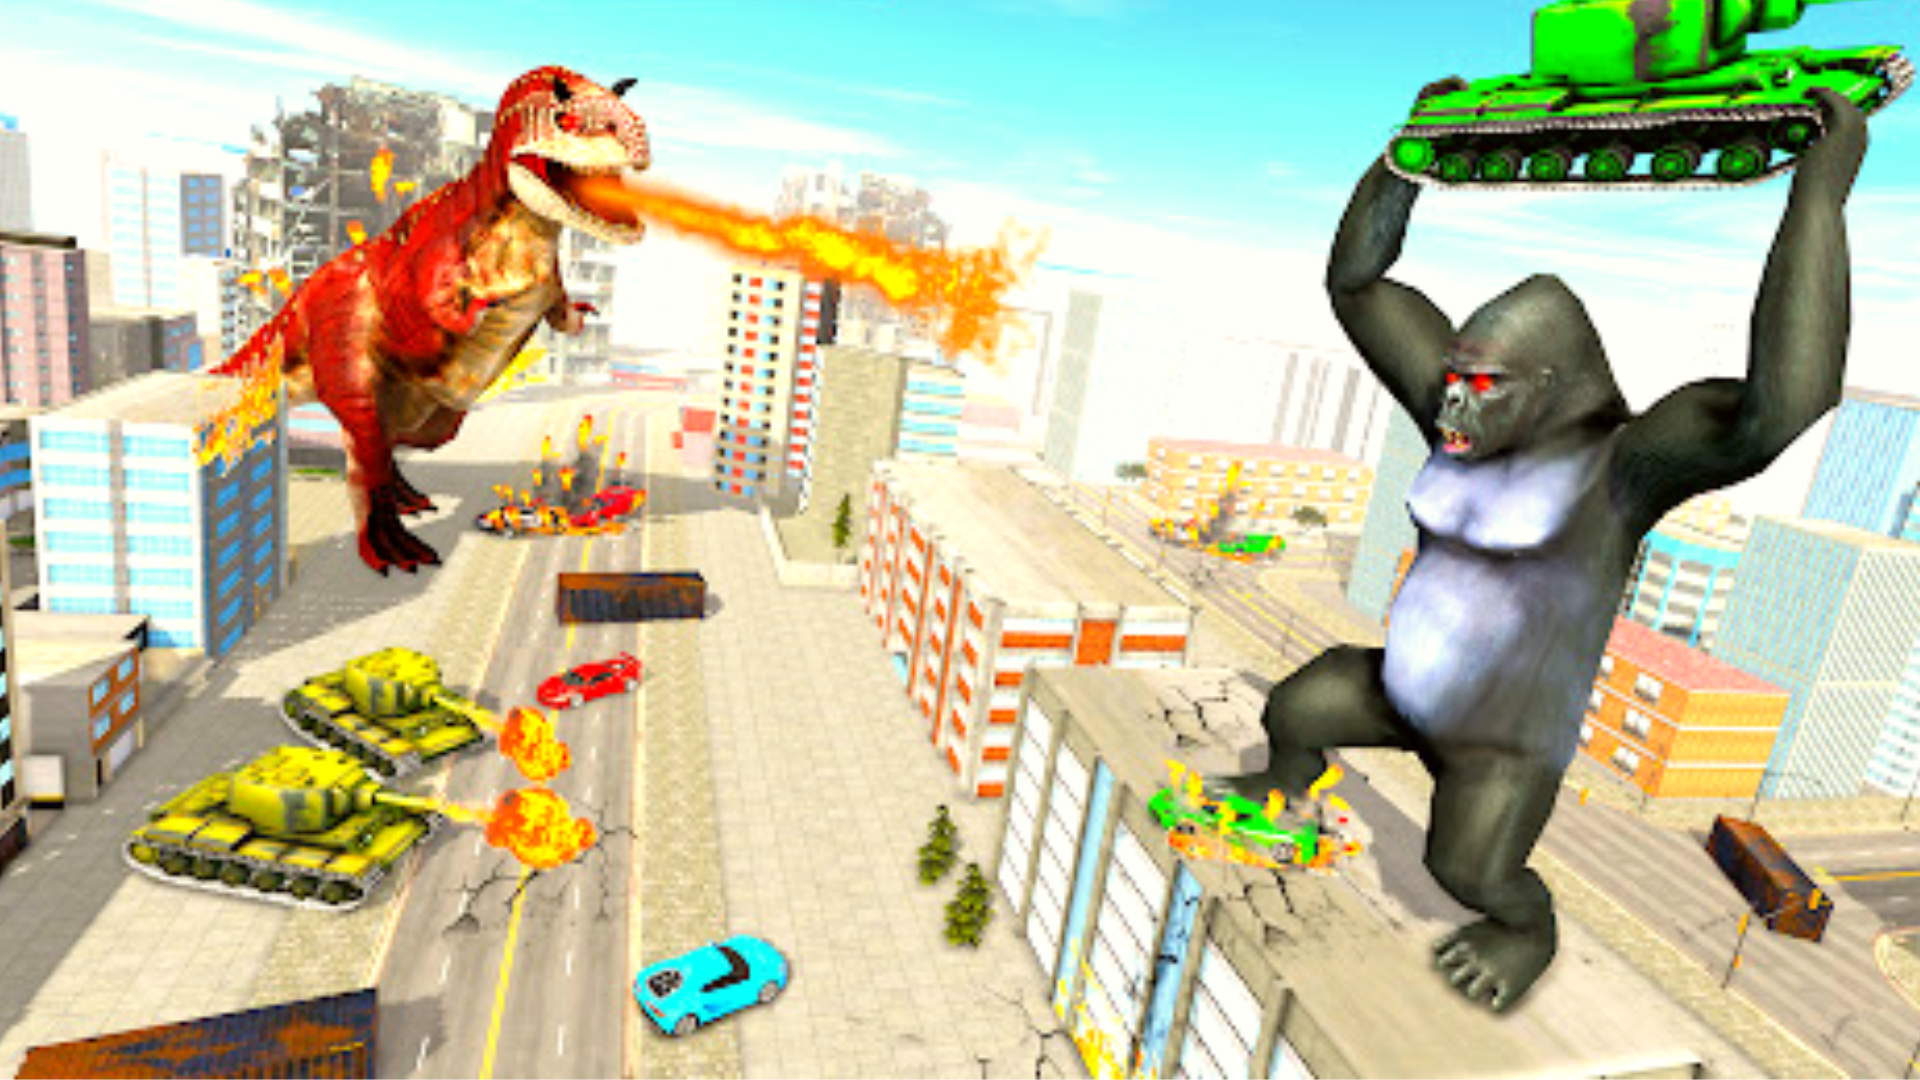 Gorilla Rampage City Attack 3D